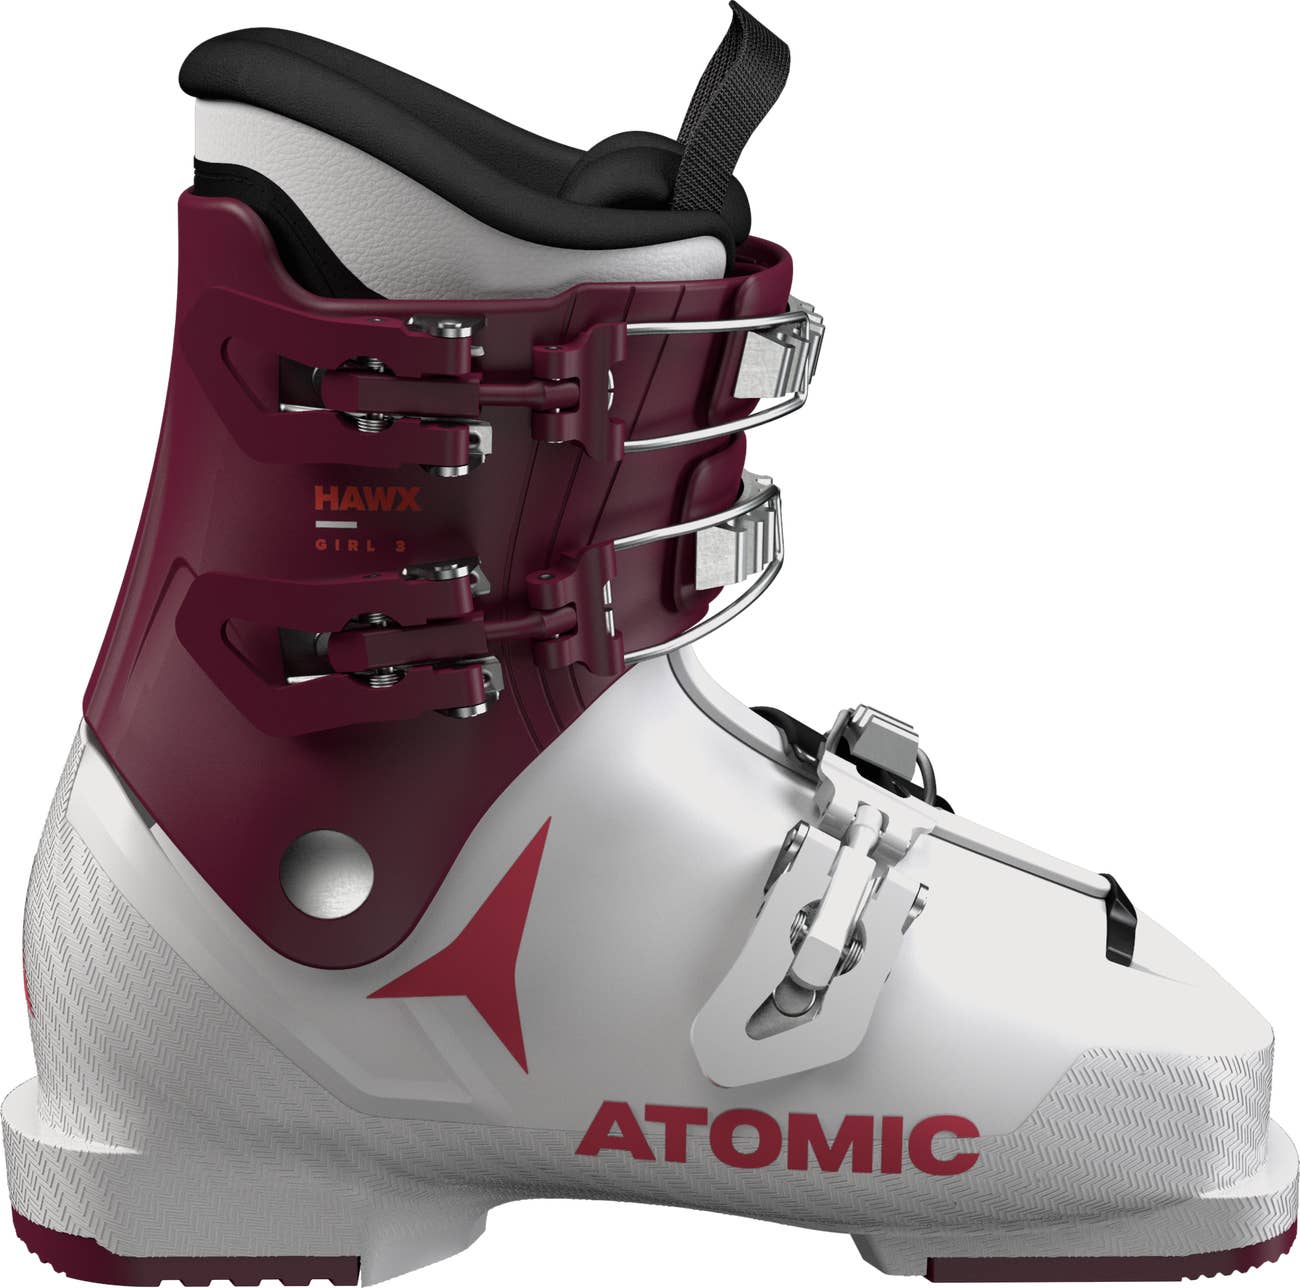 Hawx Girl 3 Village Ski Hut Atomic Junior, Junior Boots, Ski, Winter 2023